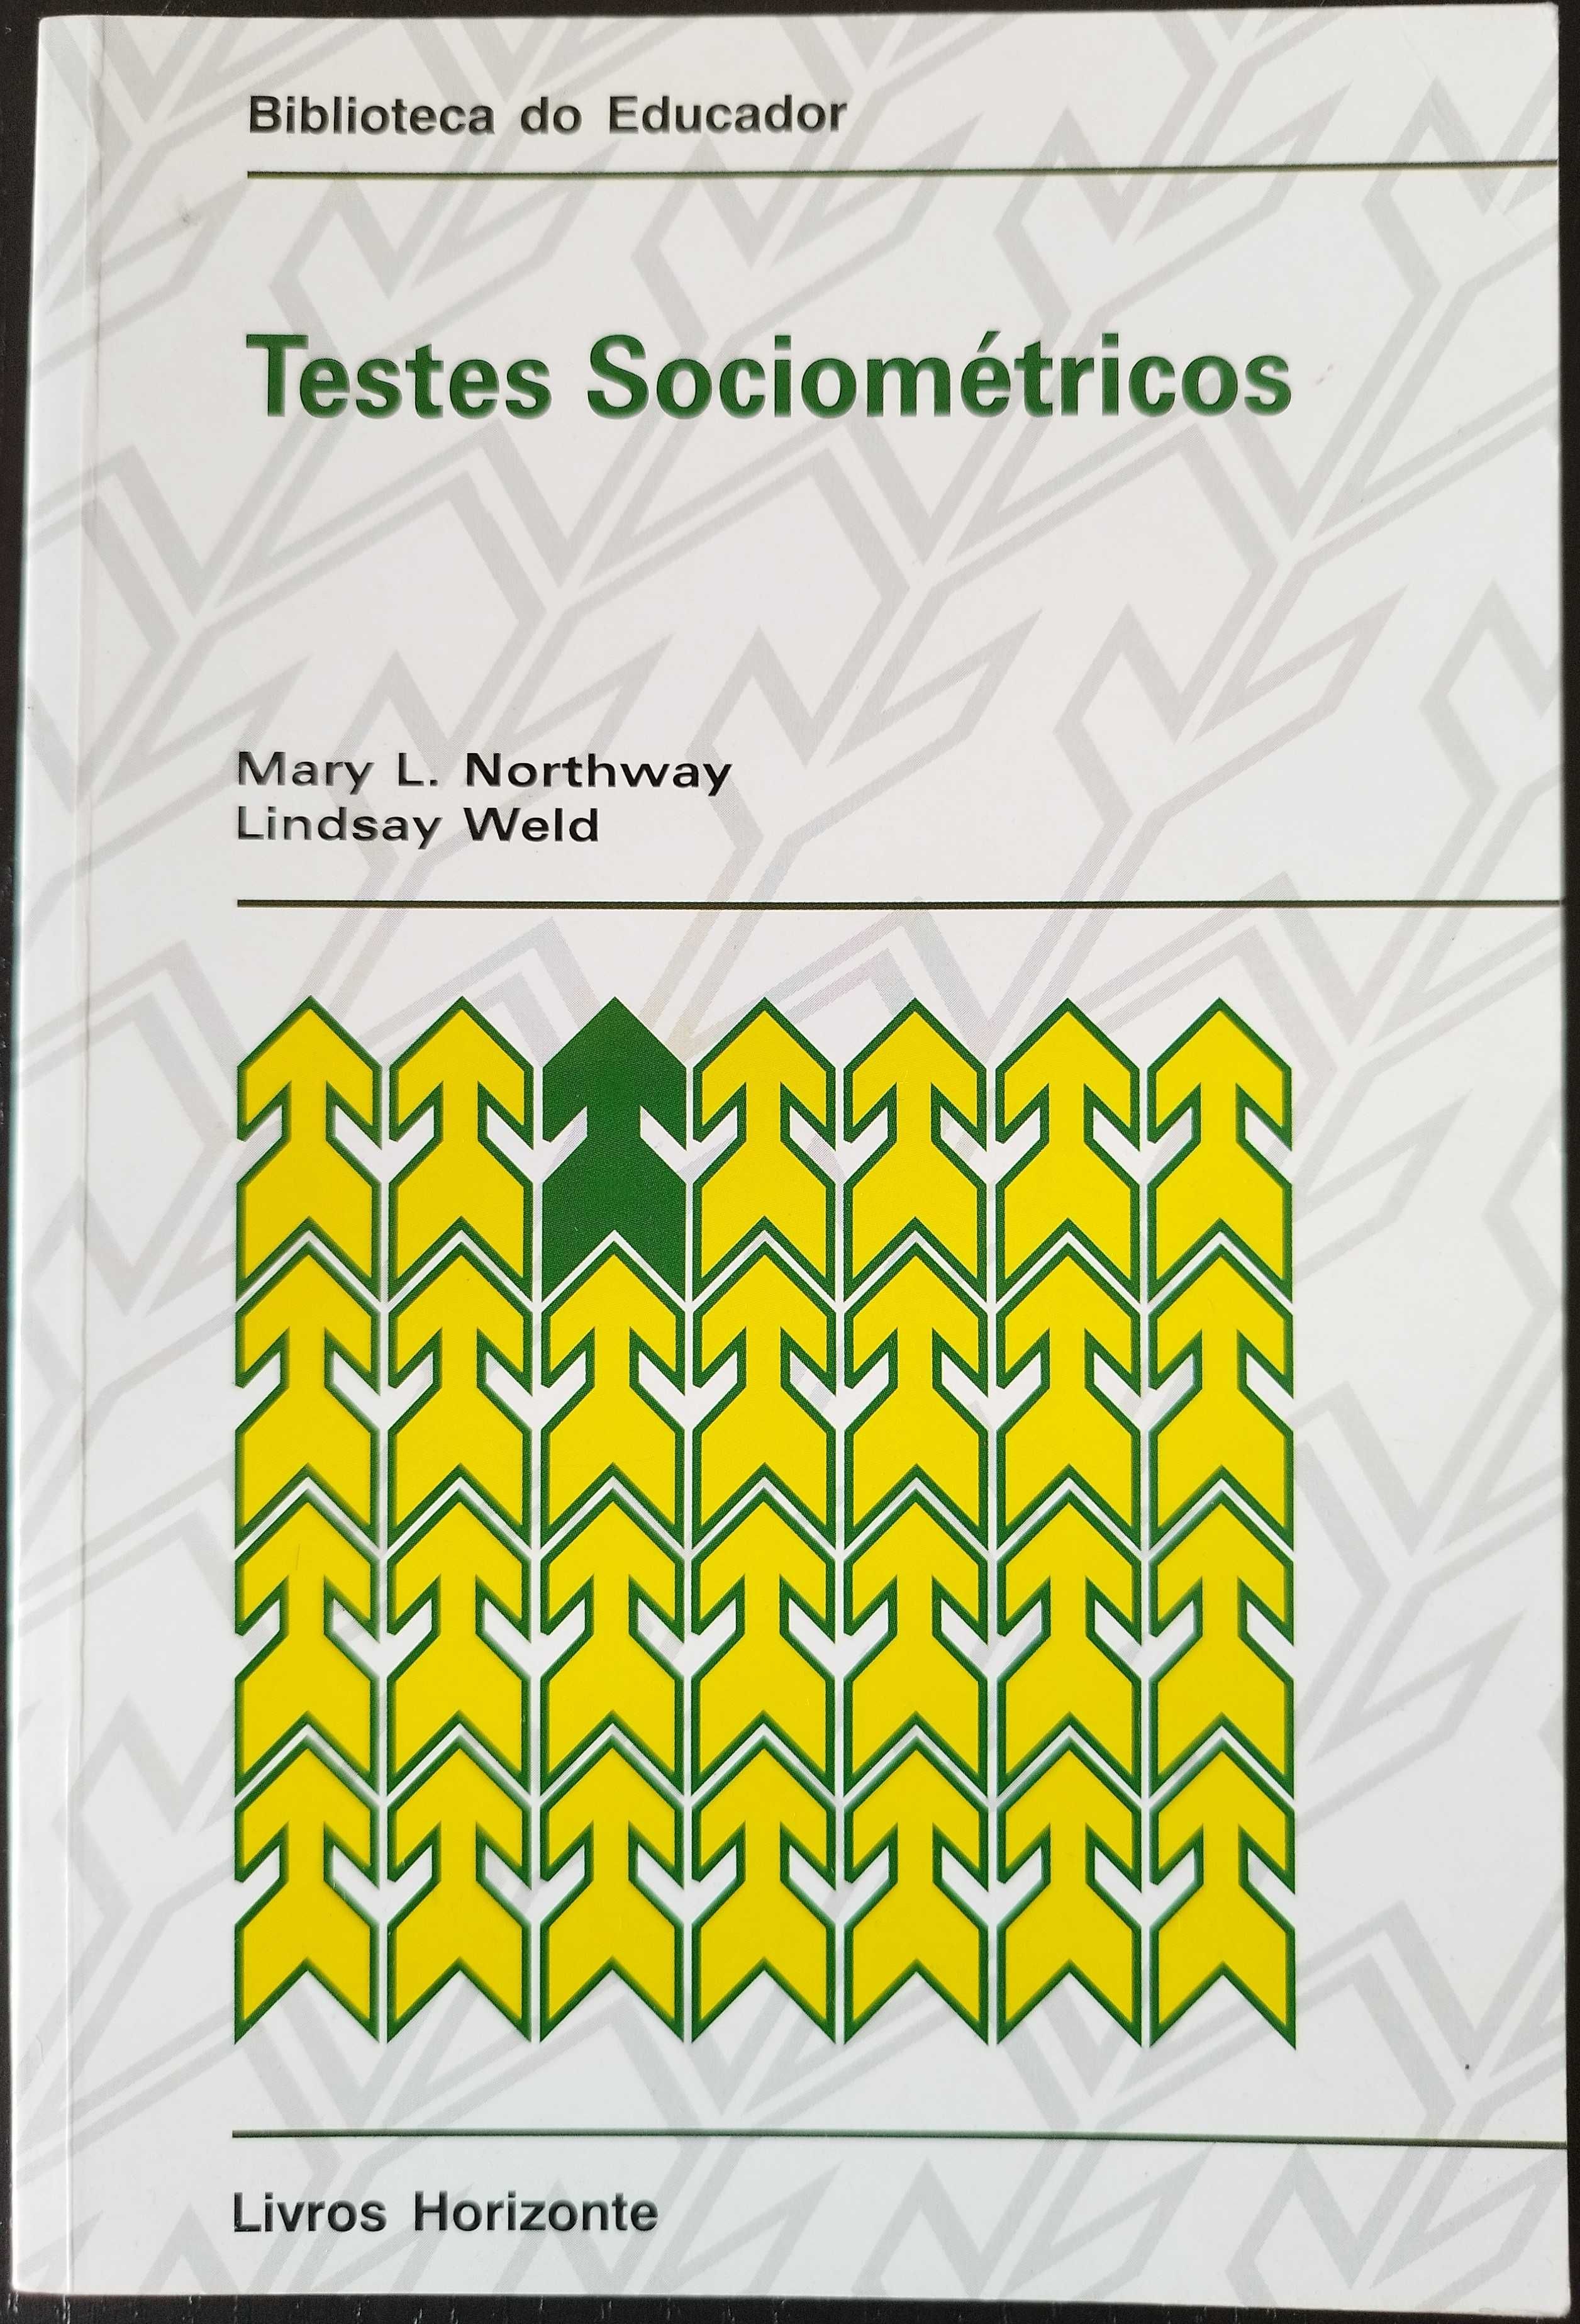 Testes Sociométricos (Mary L. Northway & Lindsay Weld)